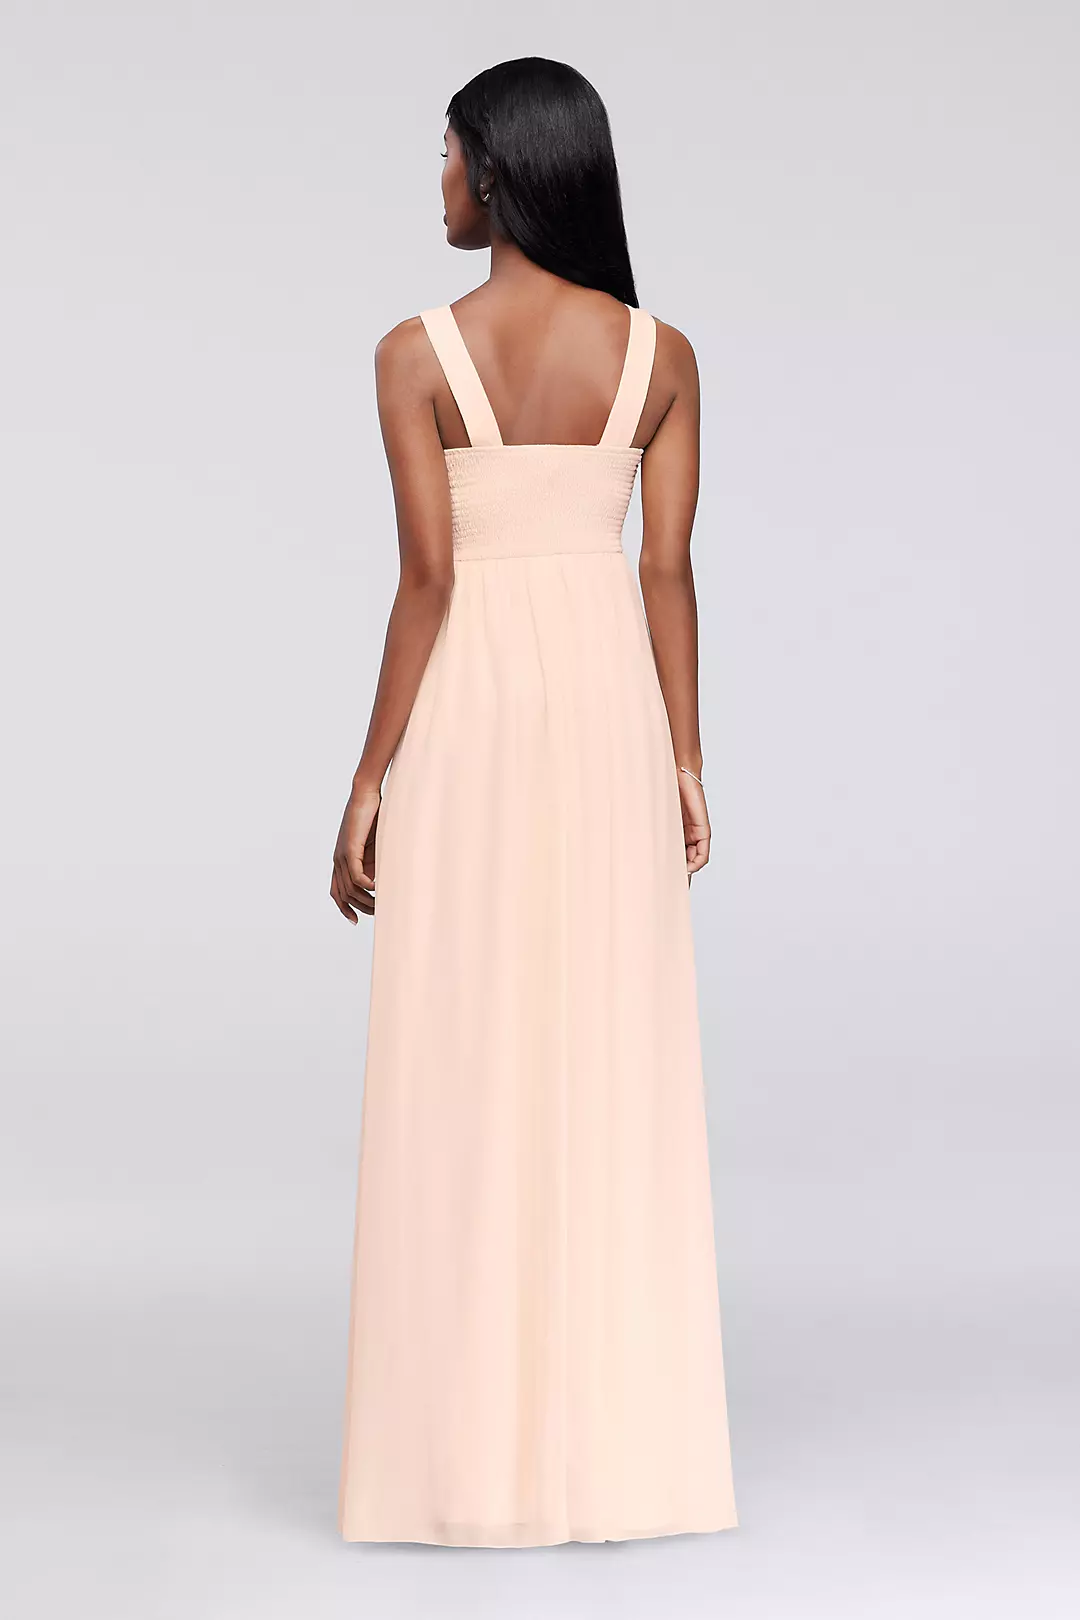 Sleeveless Prom Dress with Illusion Neckline Image 2